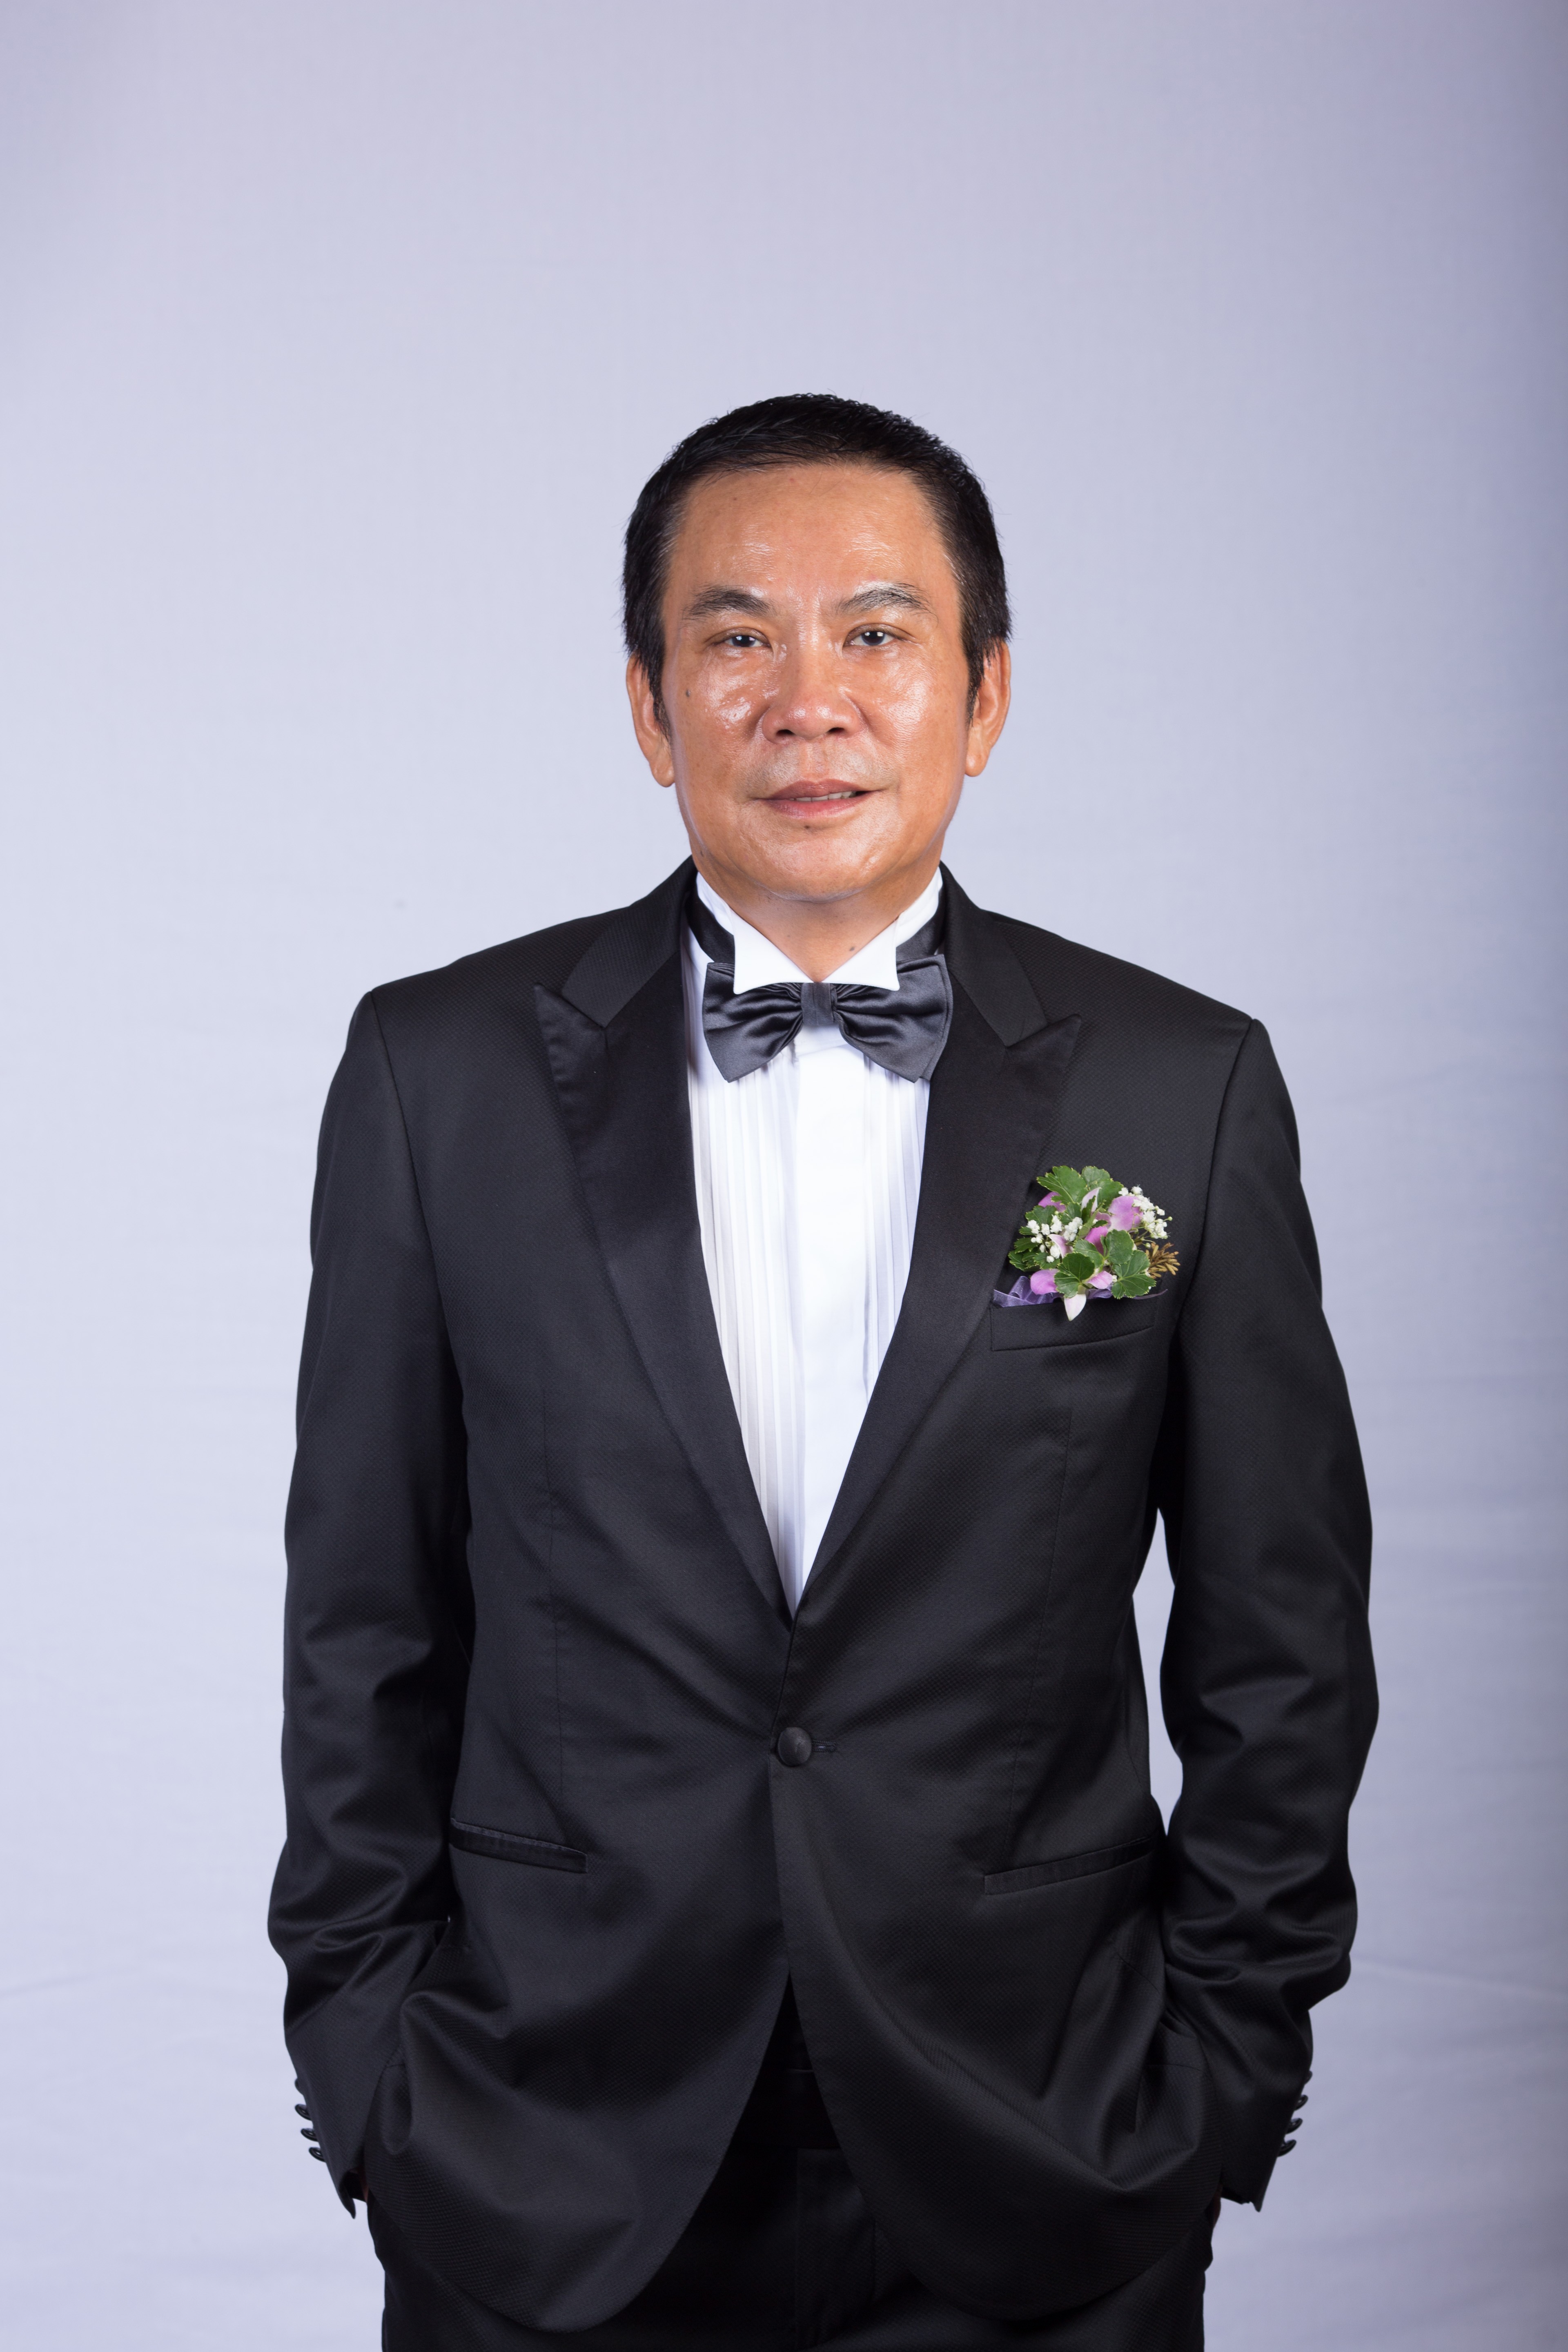 Johnson Chen, managing director